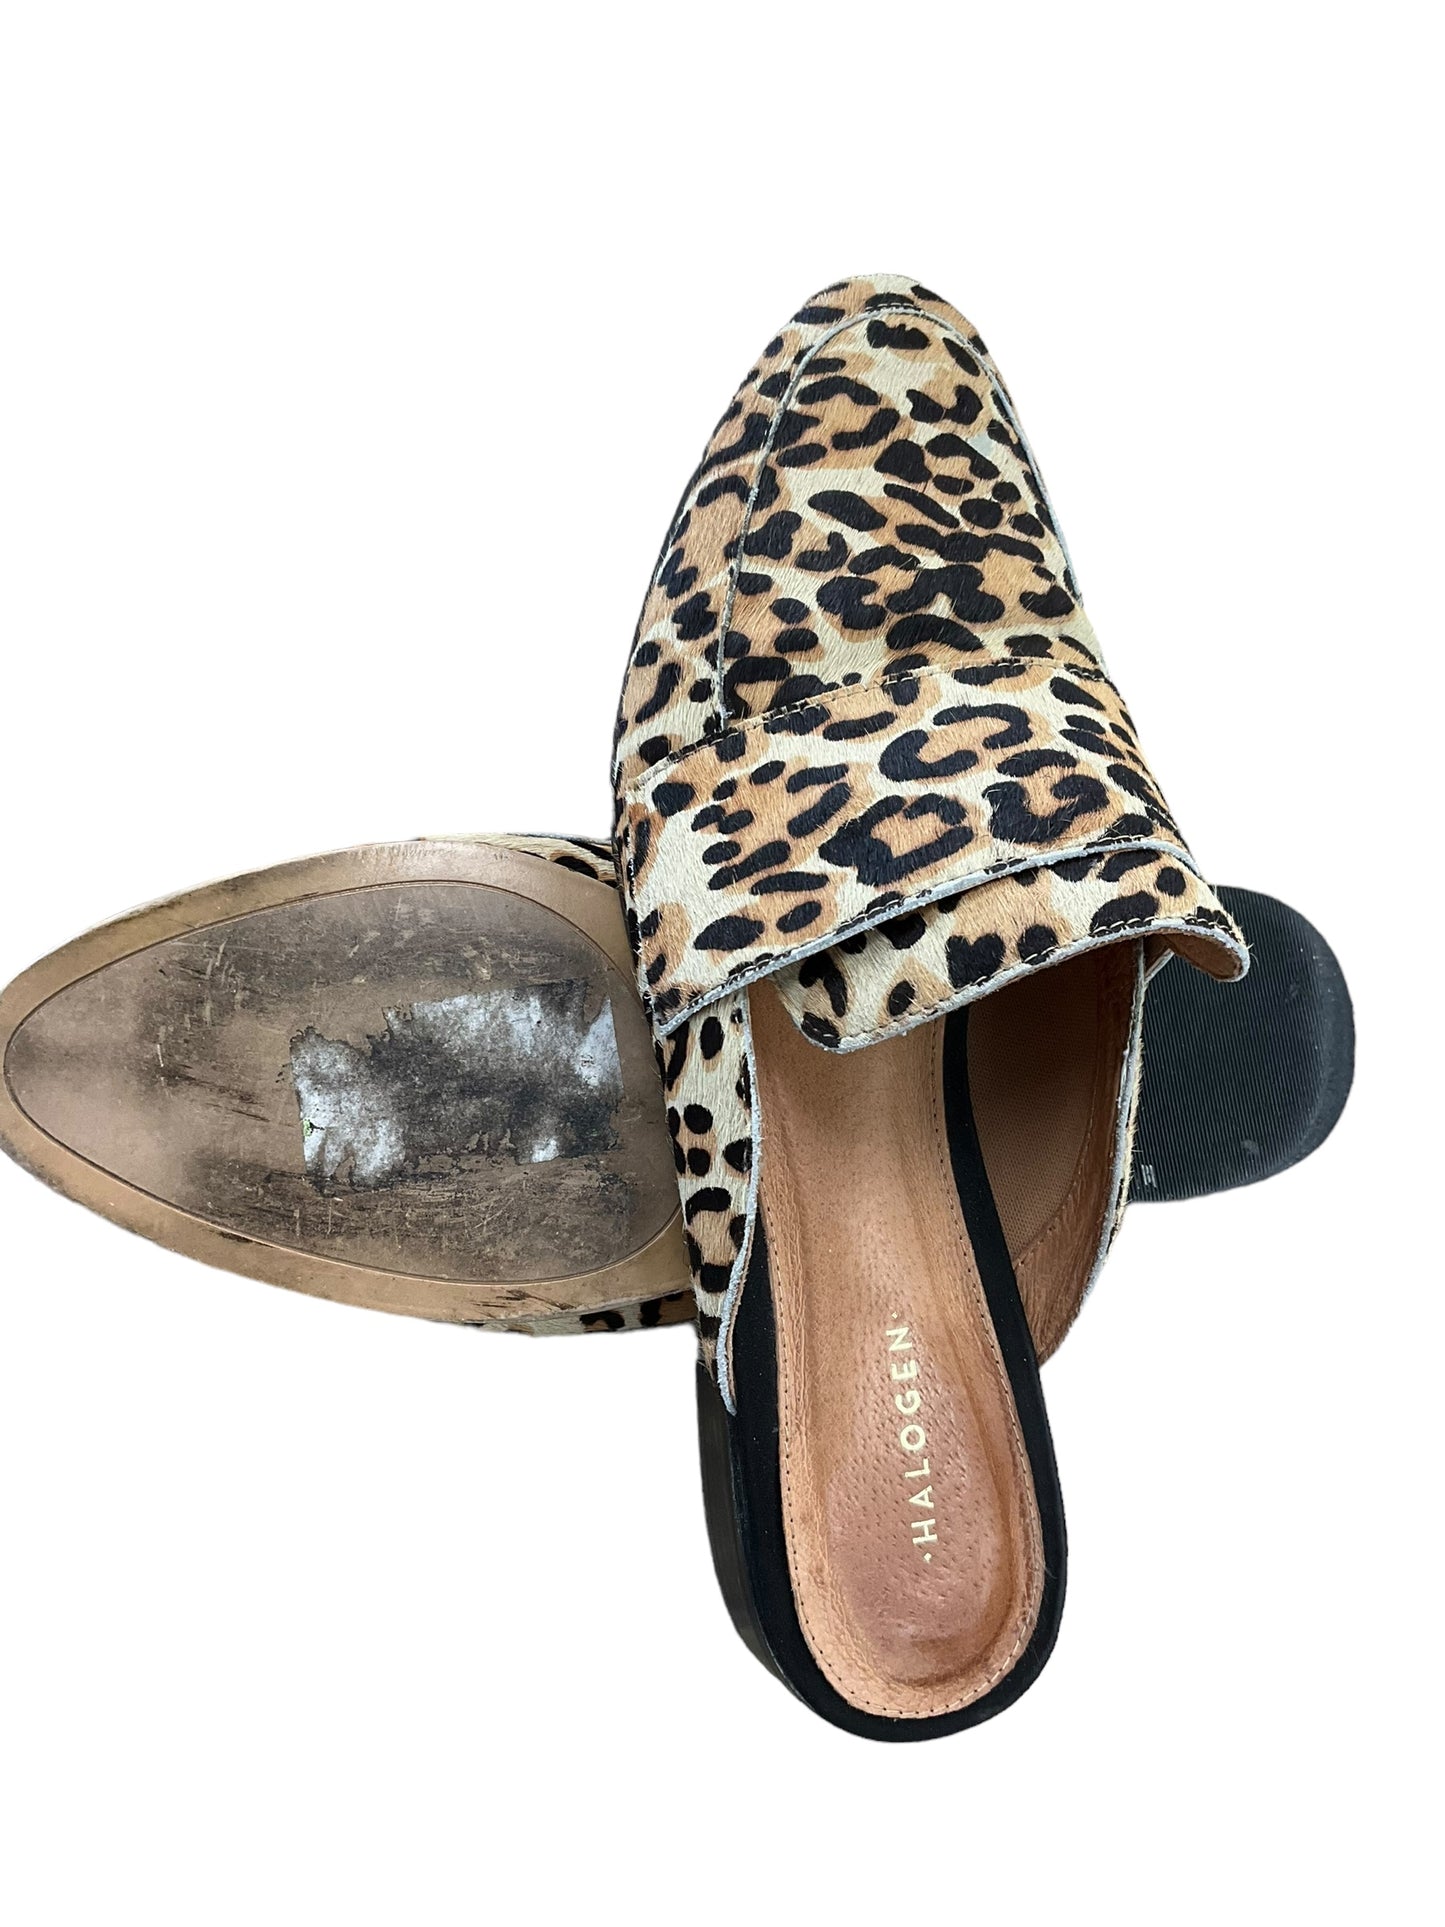 Shoes Flats Mule & Slide By Halogen  Size: 7